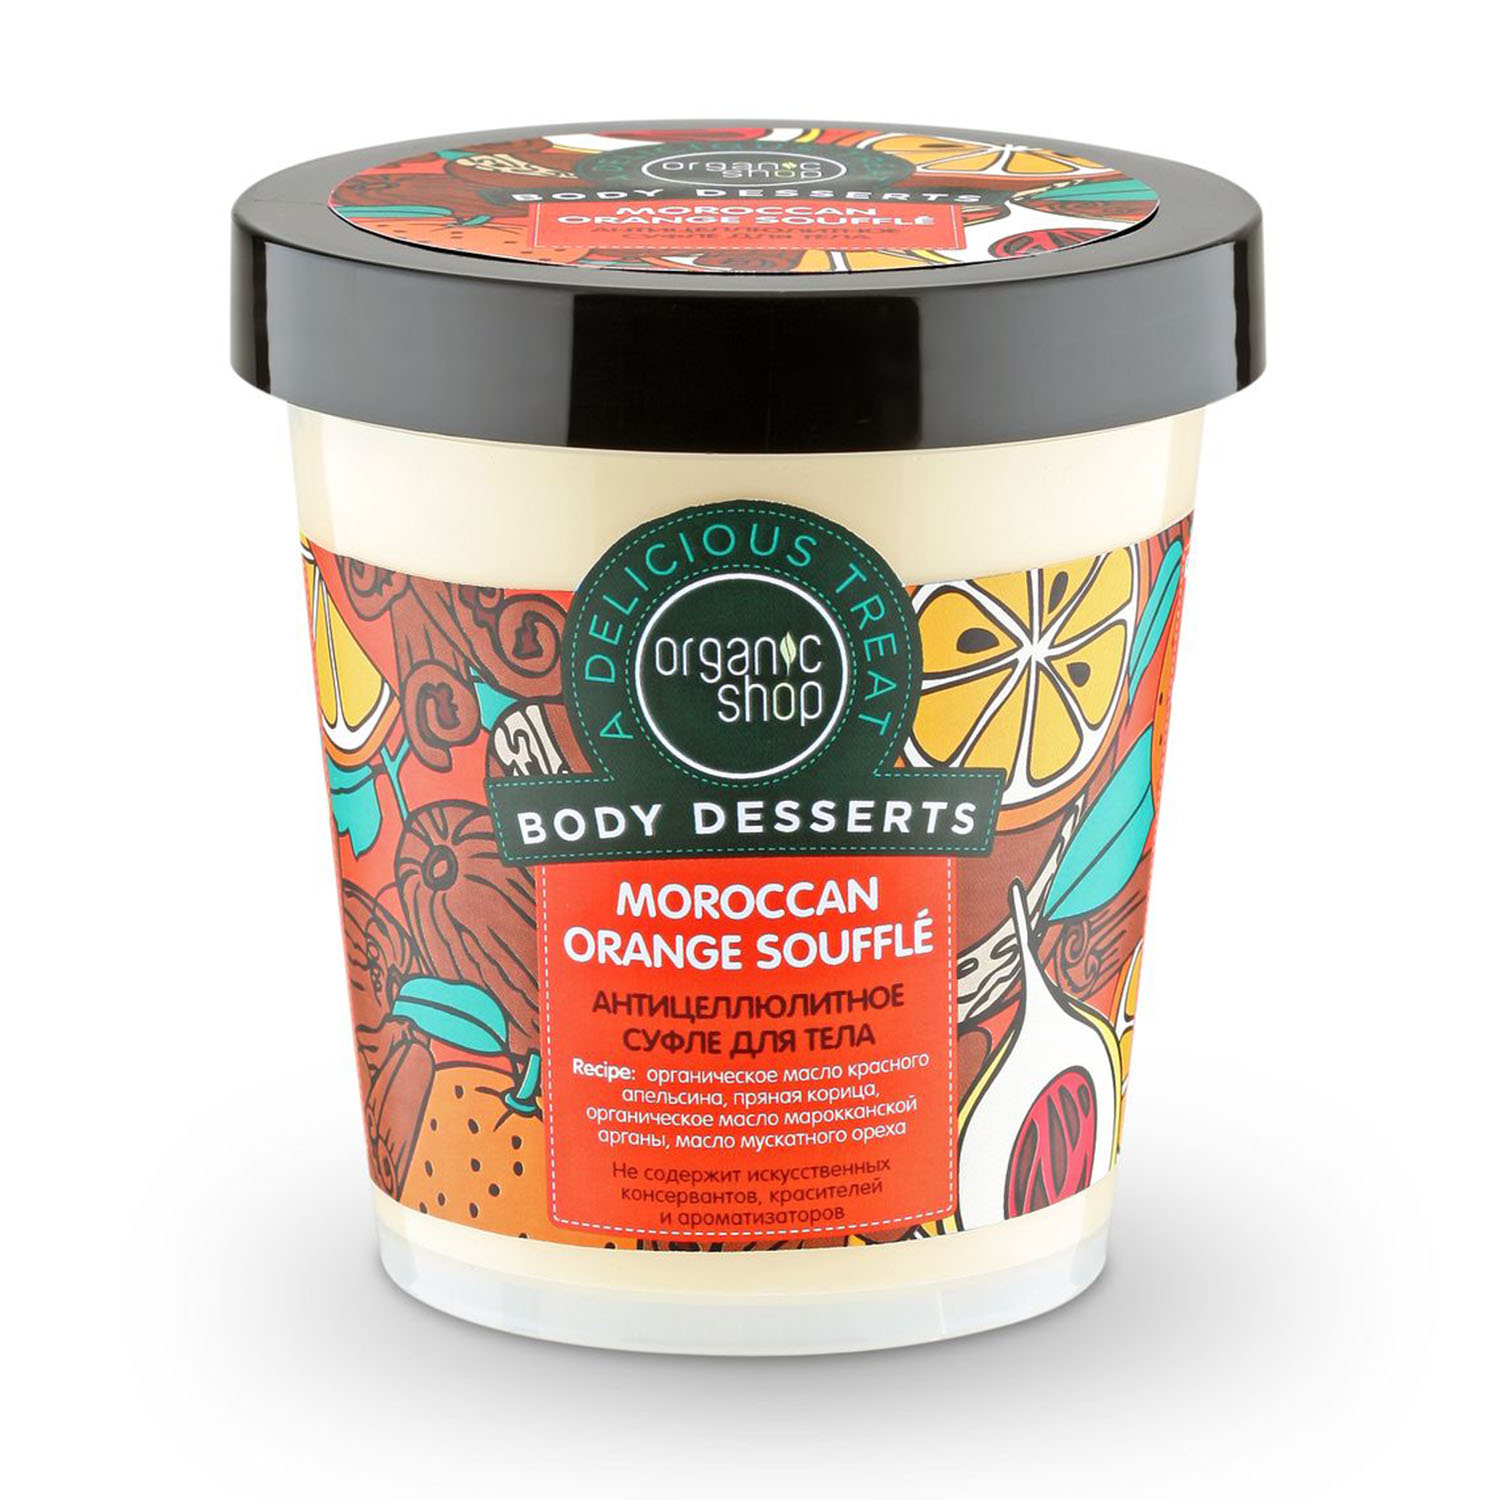 Organic Shop Антицеллюлитное суфле для тела Orange, 450 мл (Organic Shop, Body Desserts)